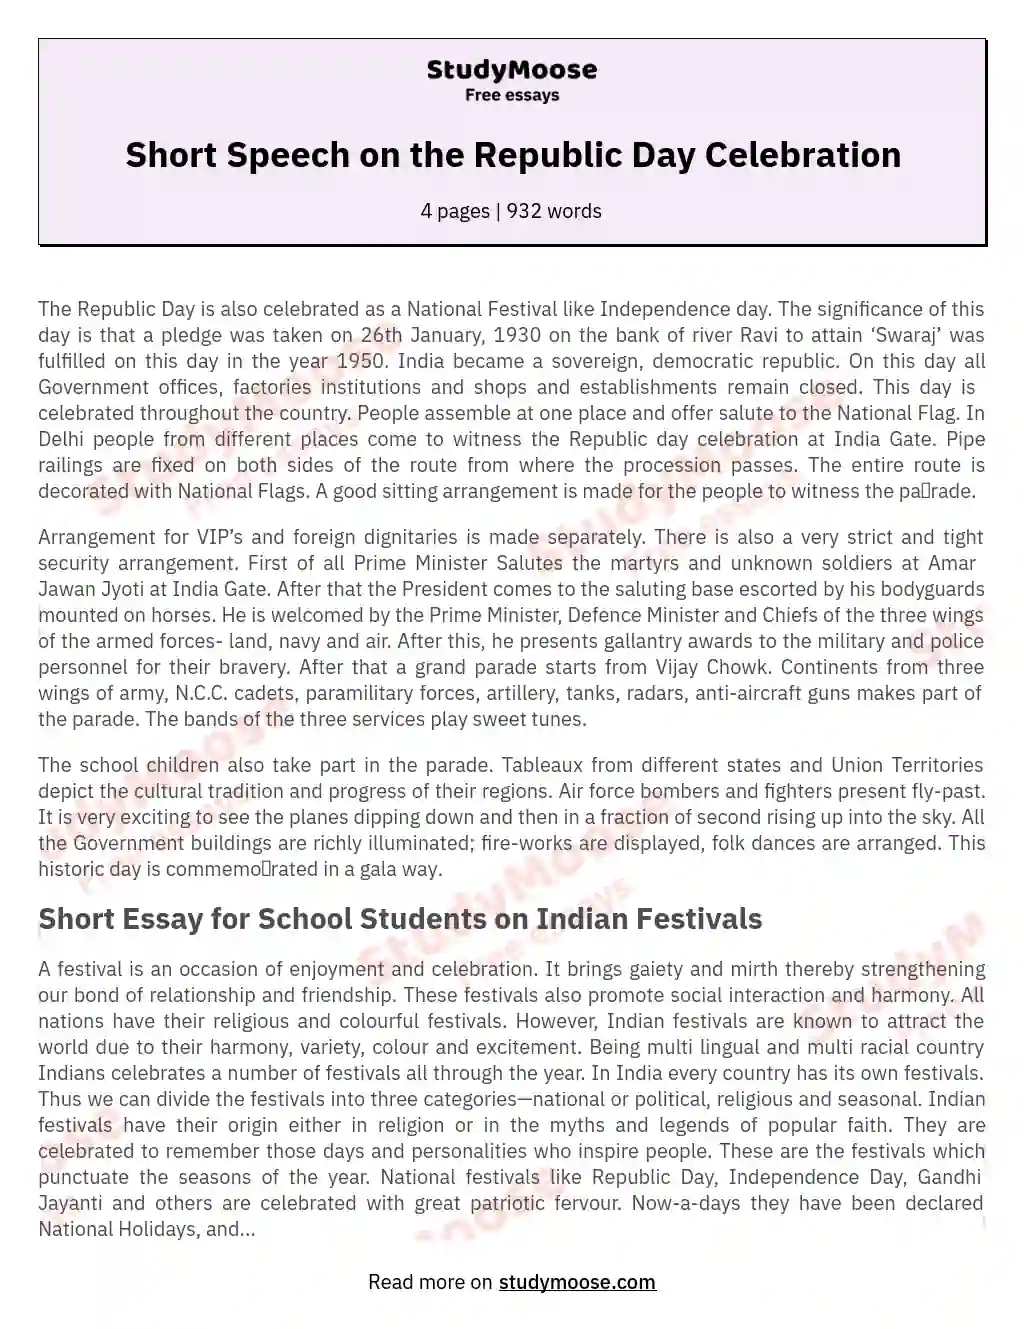 Short Speech on the Republic Day Celebration essay